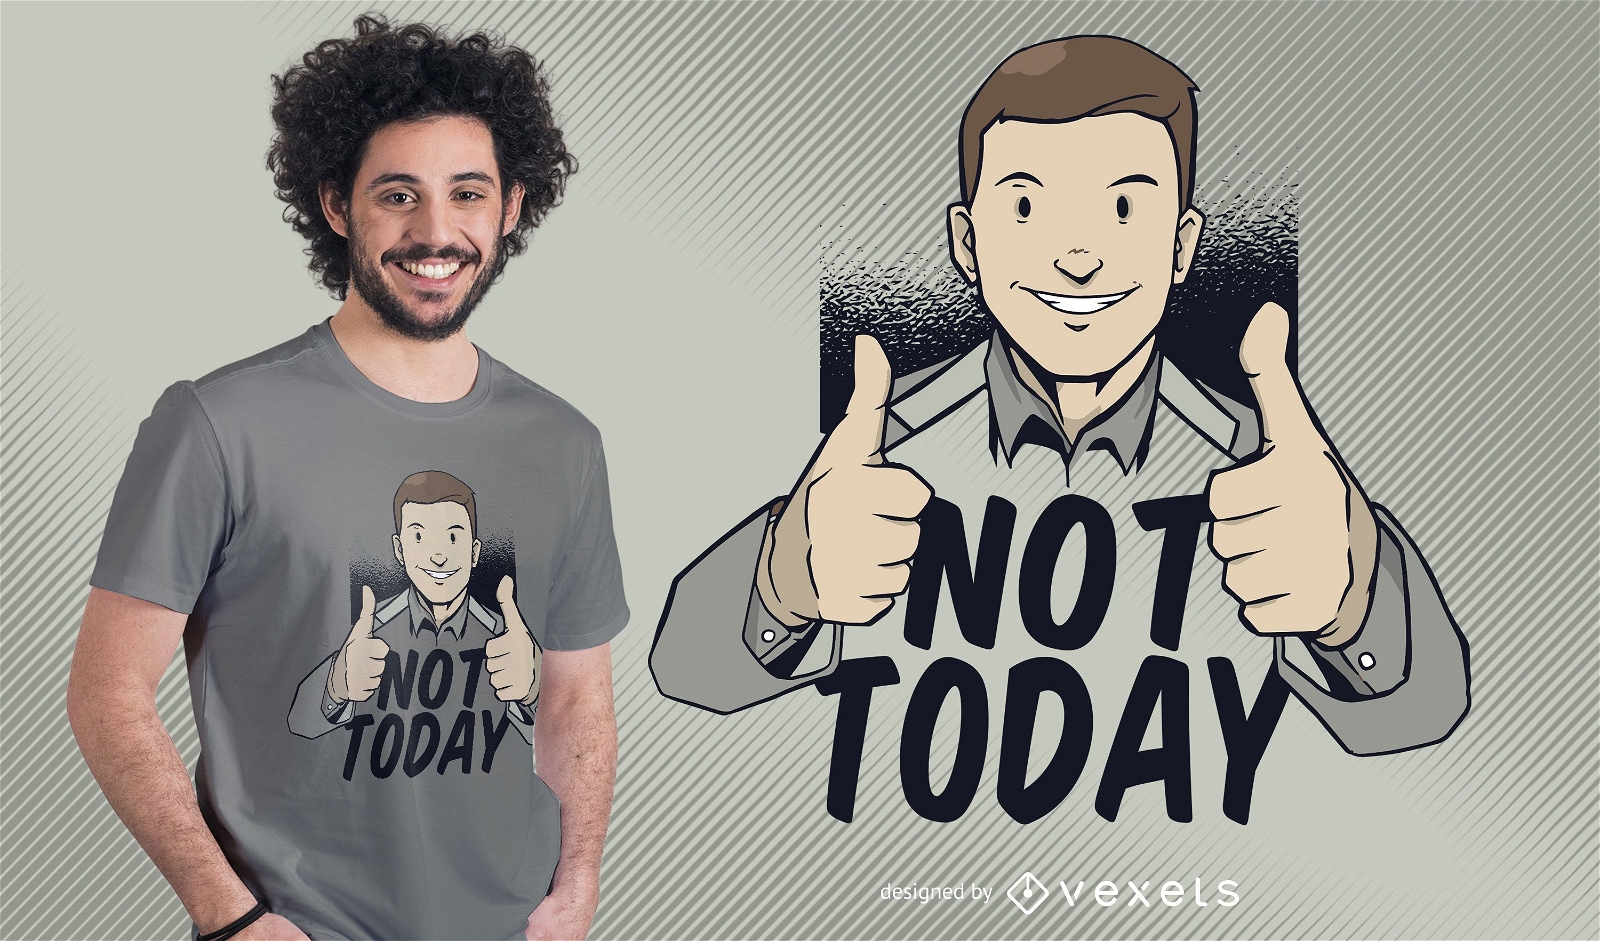 Not today t-shirt design